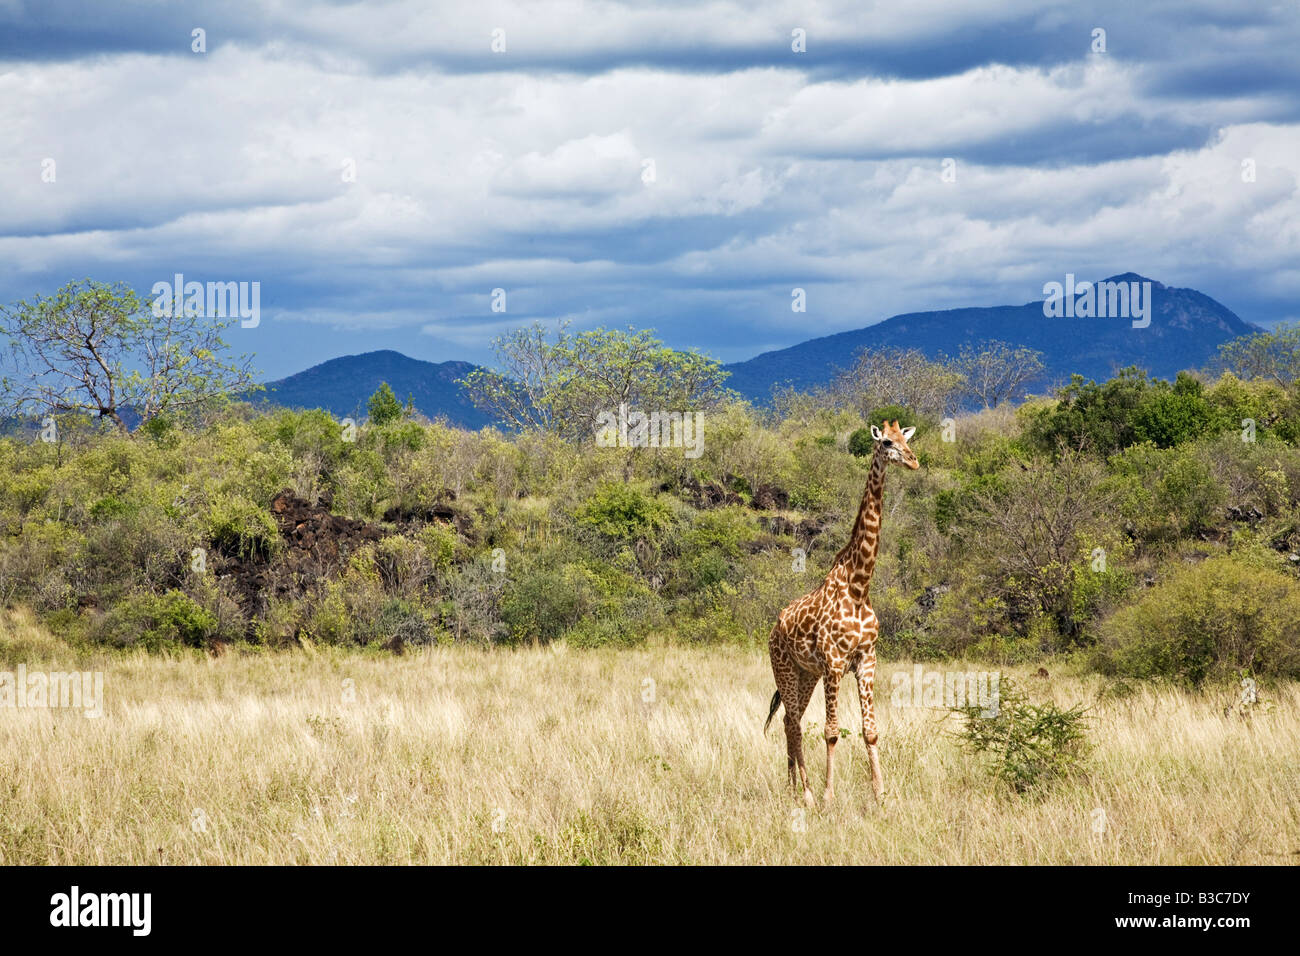 Kenya, Tsavo West National Park. A Maasai giraffe (Giraffa camelopardalis) in front of lava rocks with the Ngulia Mountain range rising in the background. Stock Photo